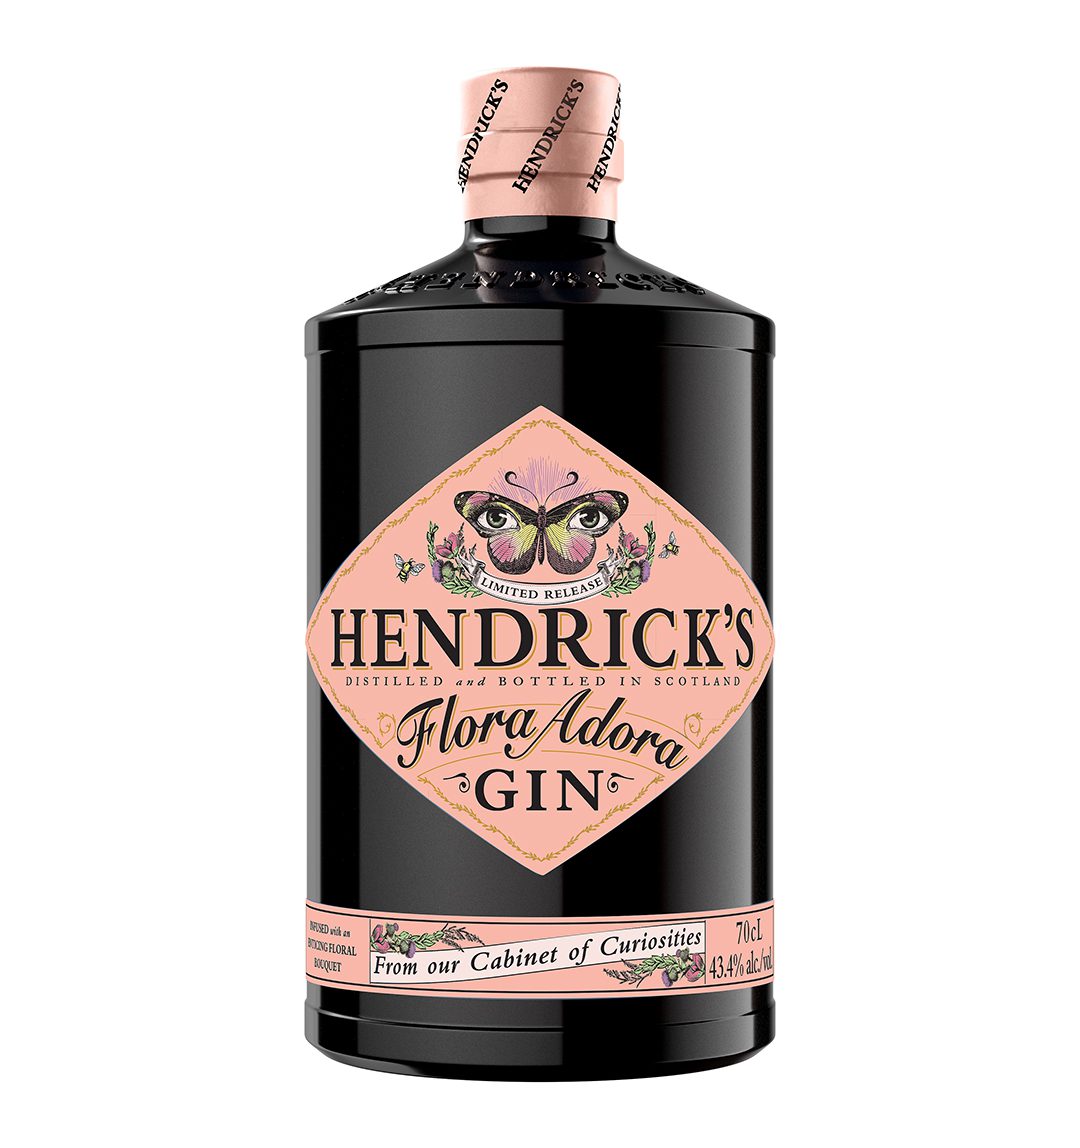 Hendrick's new Flora Adora Gin